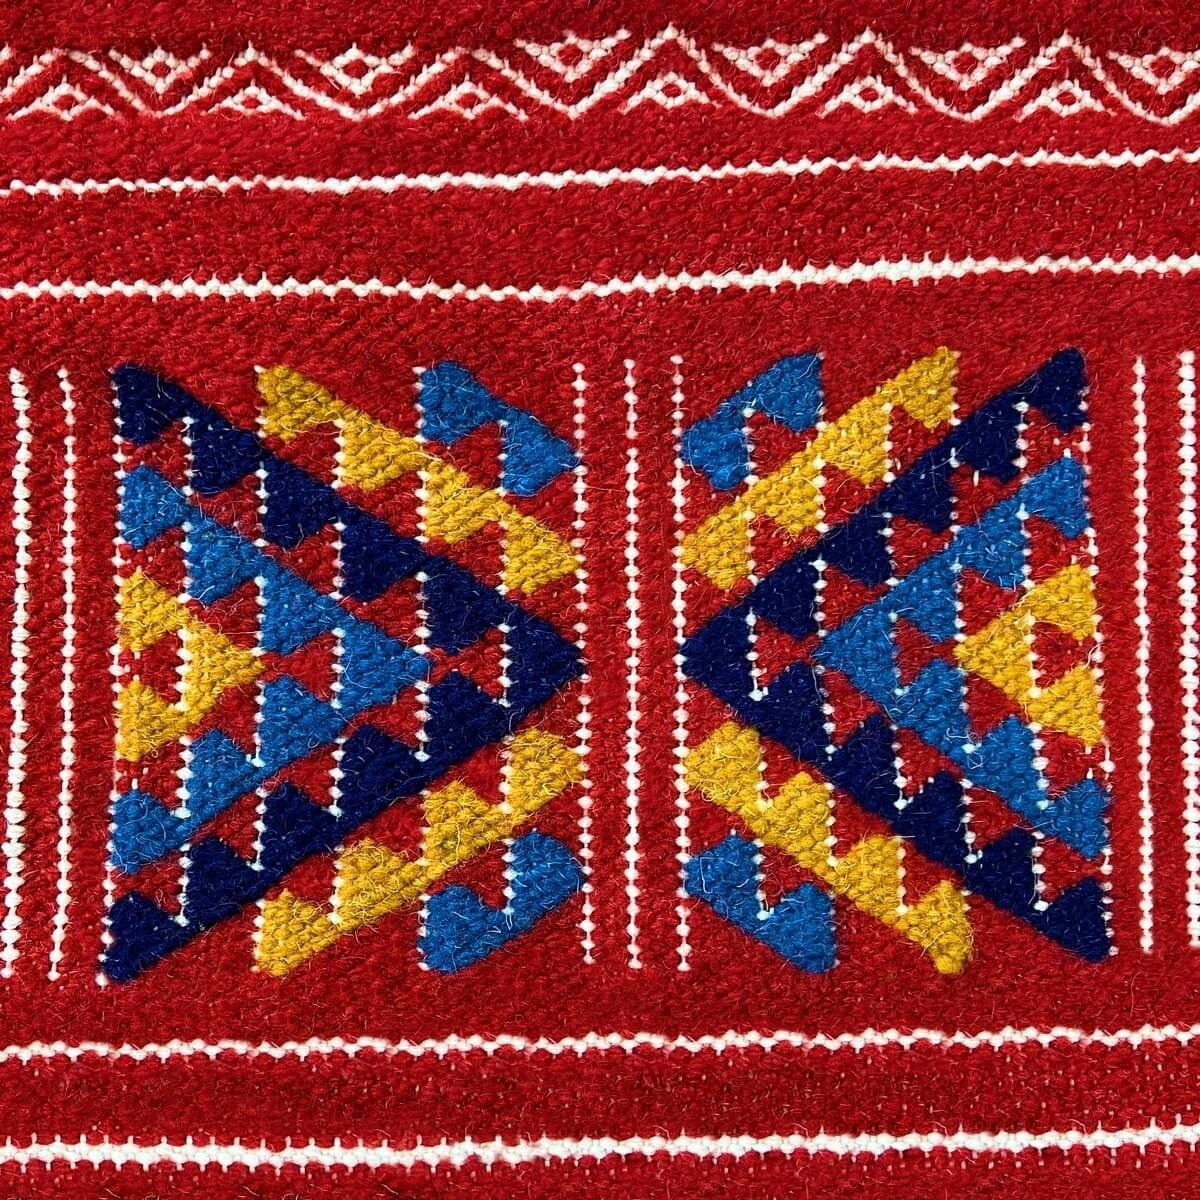 Berber tapijt Tapijt Kilim Melkhail 112x176 cm Rood/Veelkleurig (Handgeweven, Wol, Tunesië) Tunesisch kilimdeken, Marokkaanse st